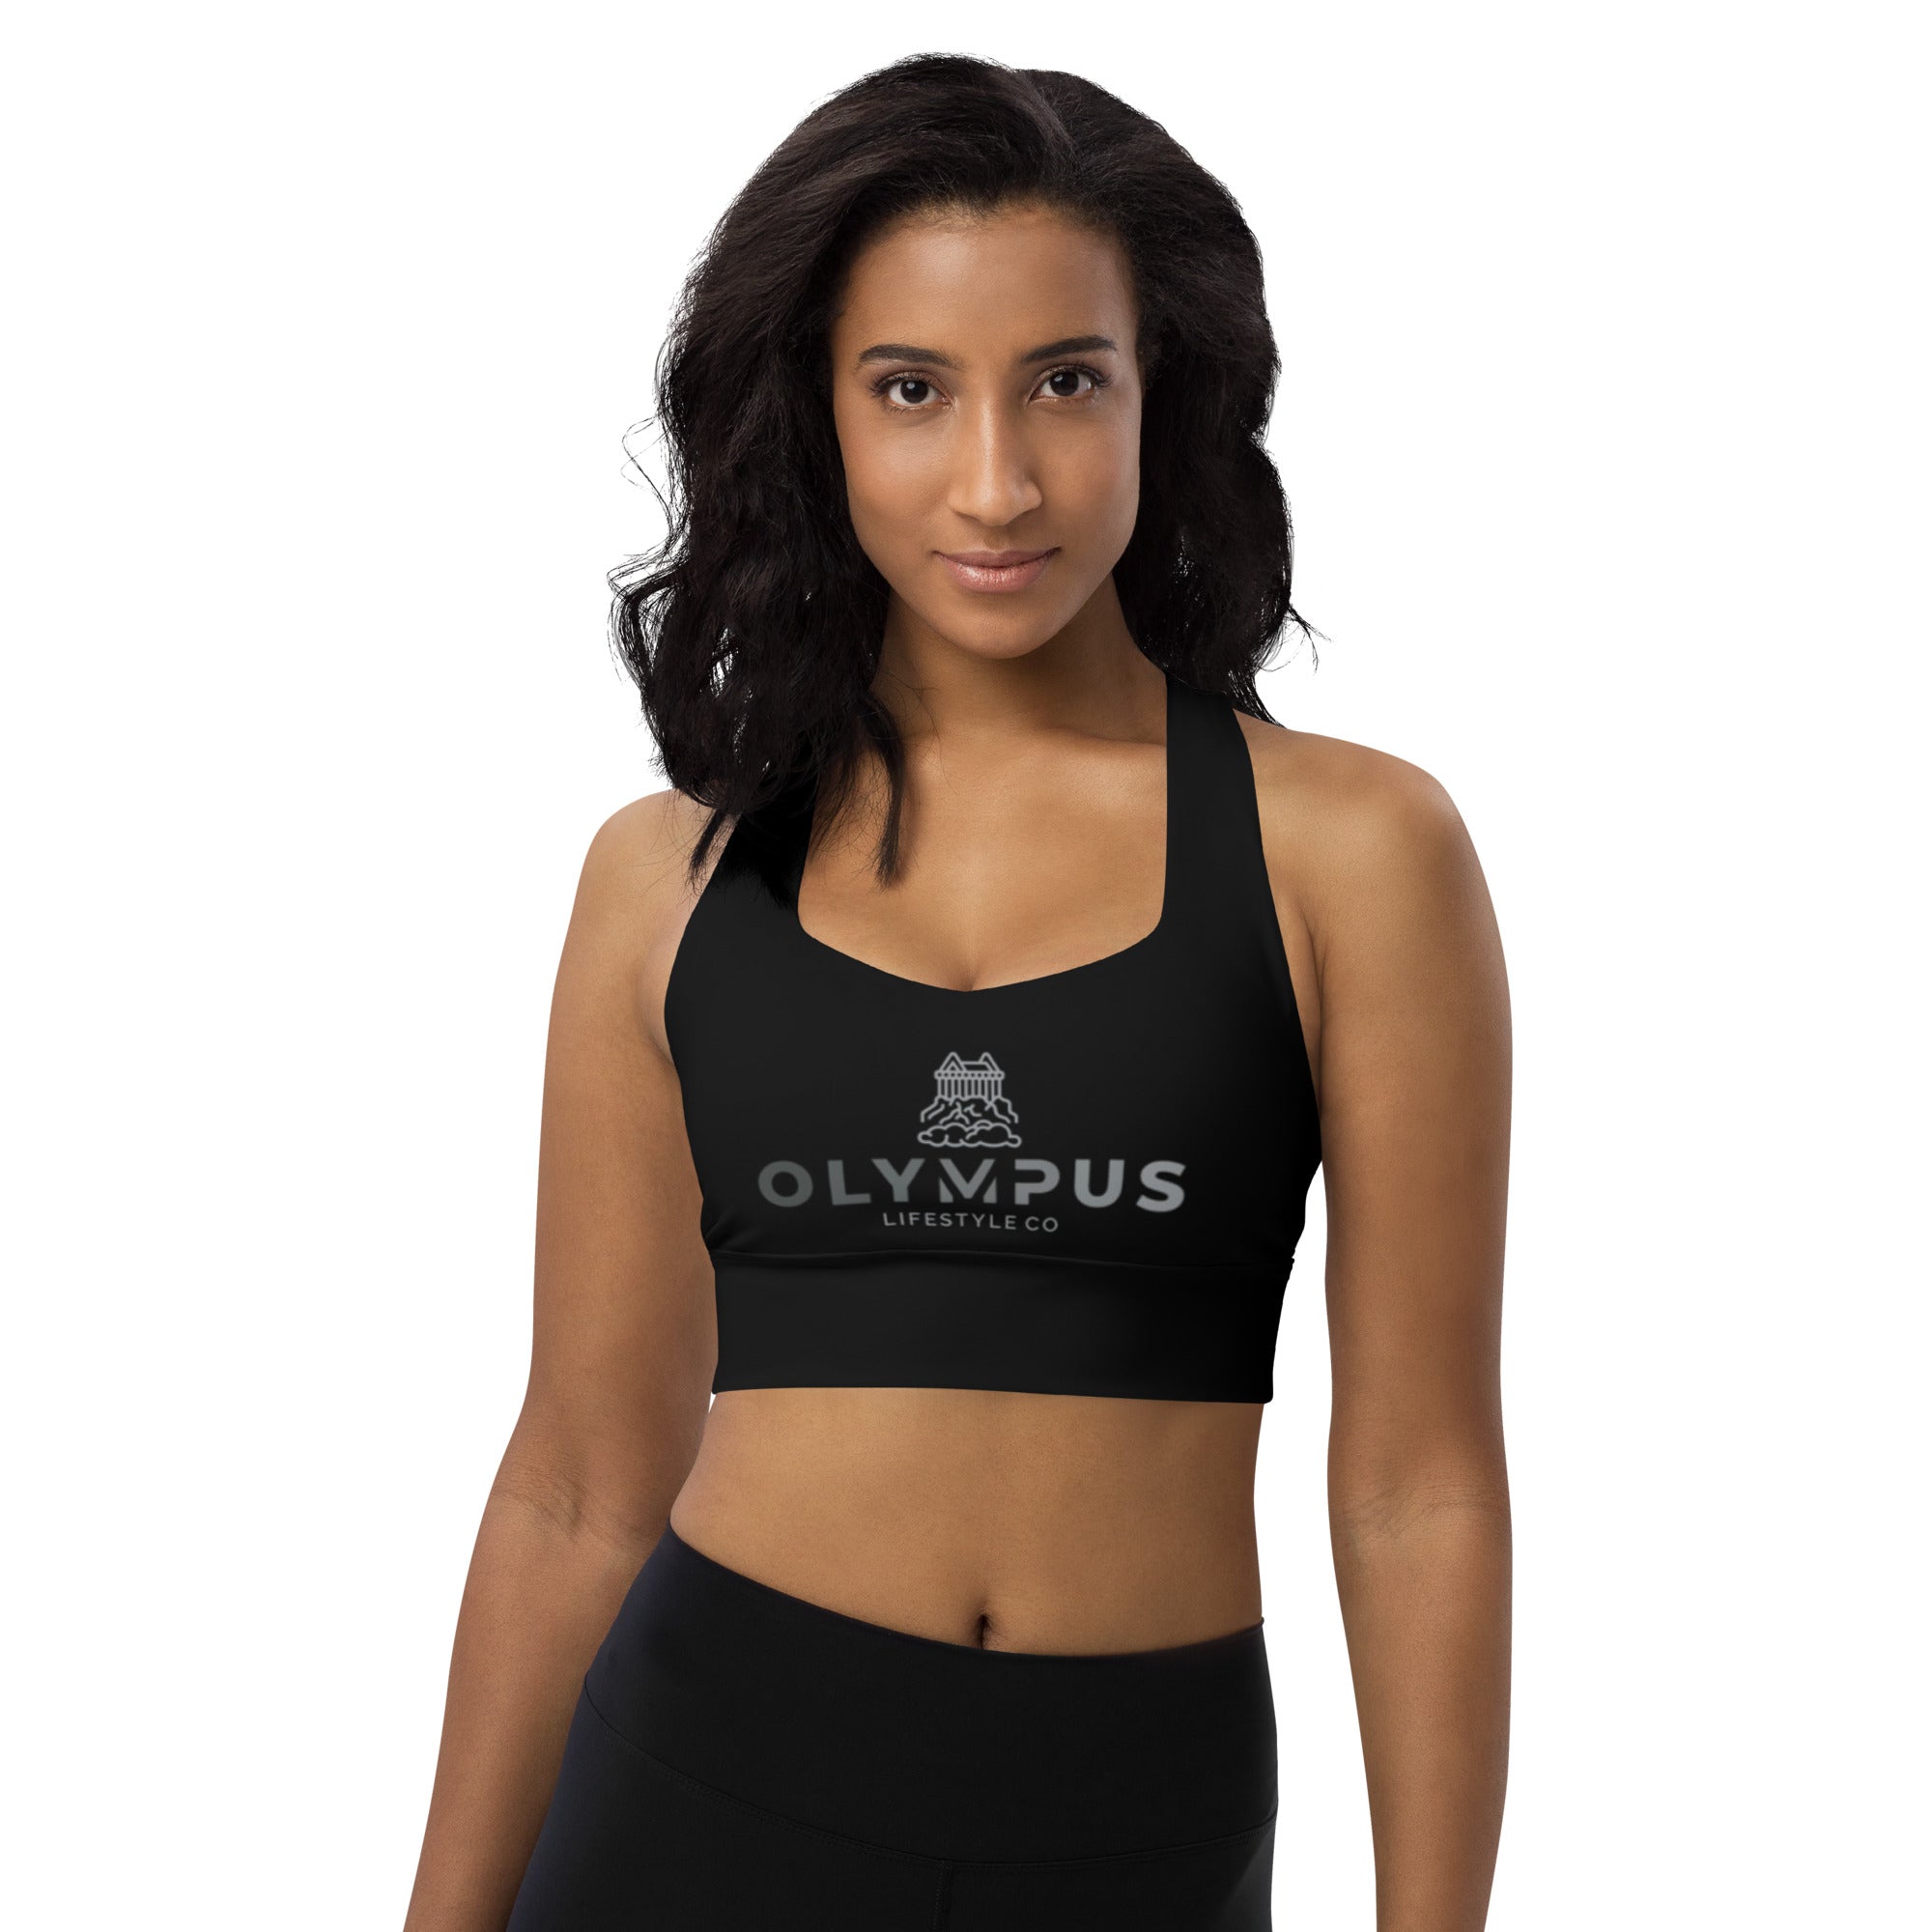 Olympus Women's Black Longline Sports Bra Grey Logo